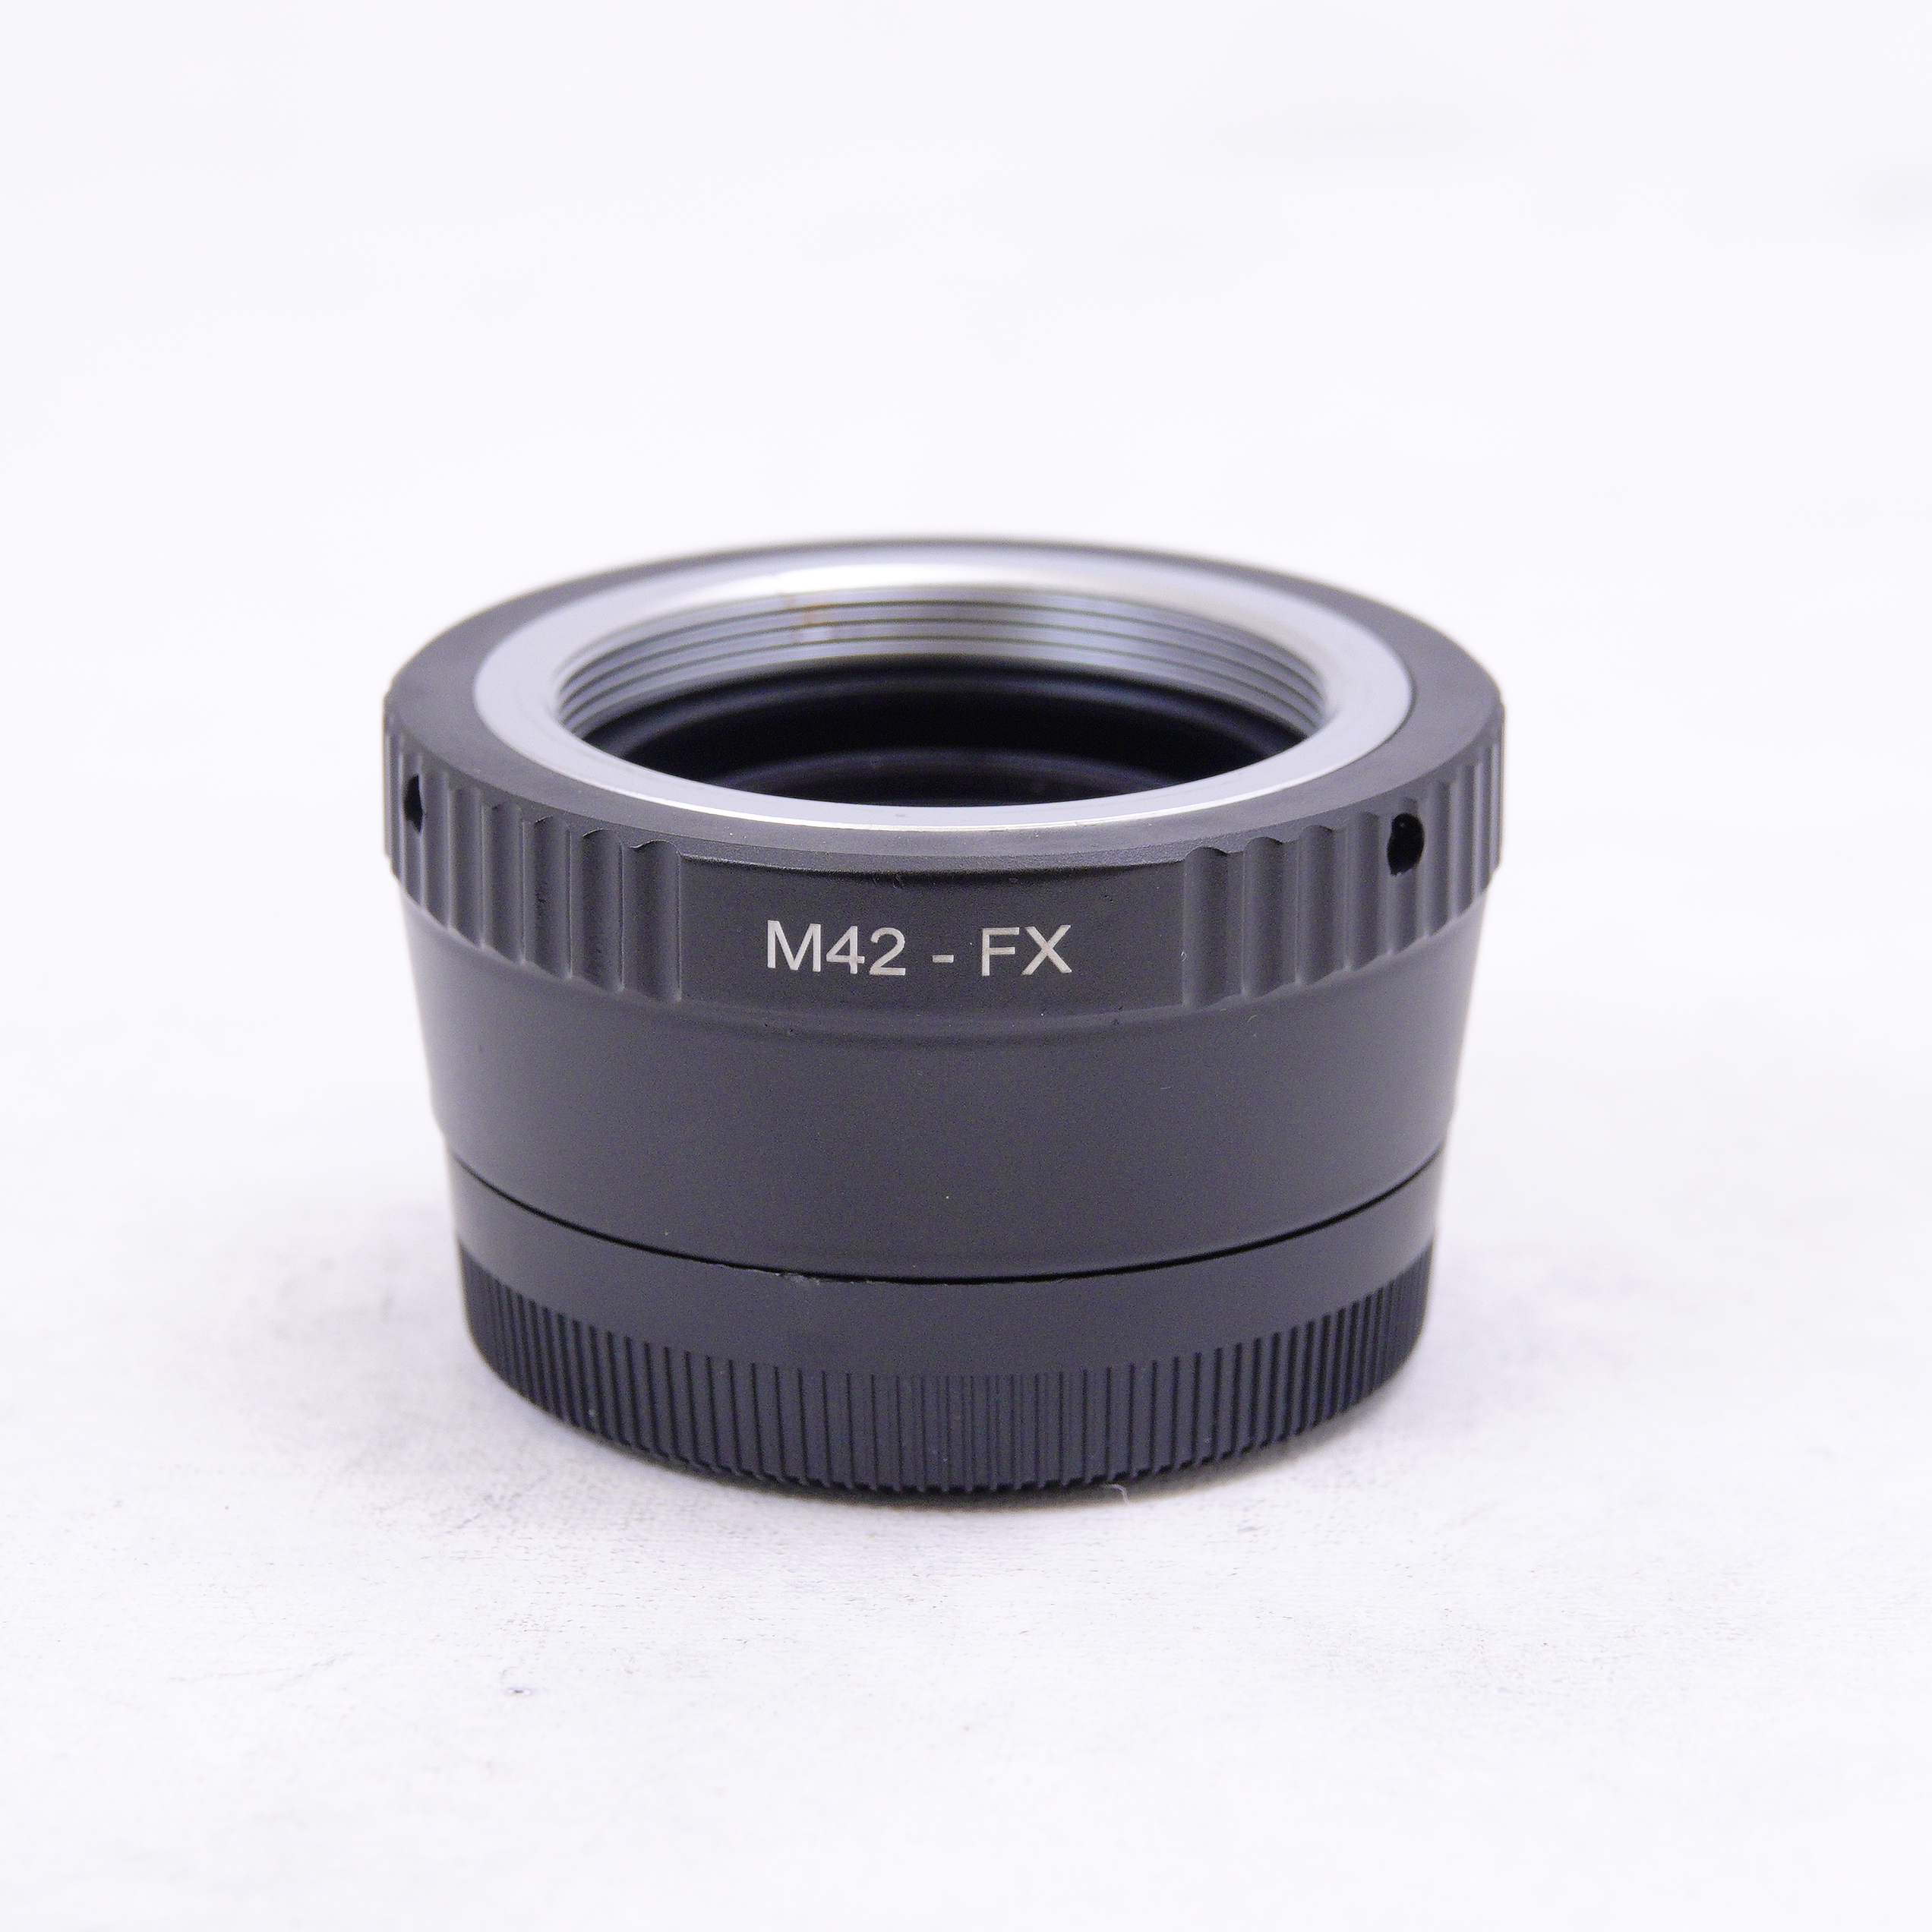 Pixco M42-FX Speed​​​​Booster adaptador y reductor focal - Usado